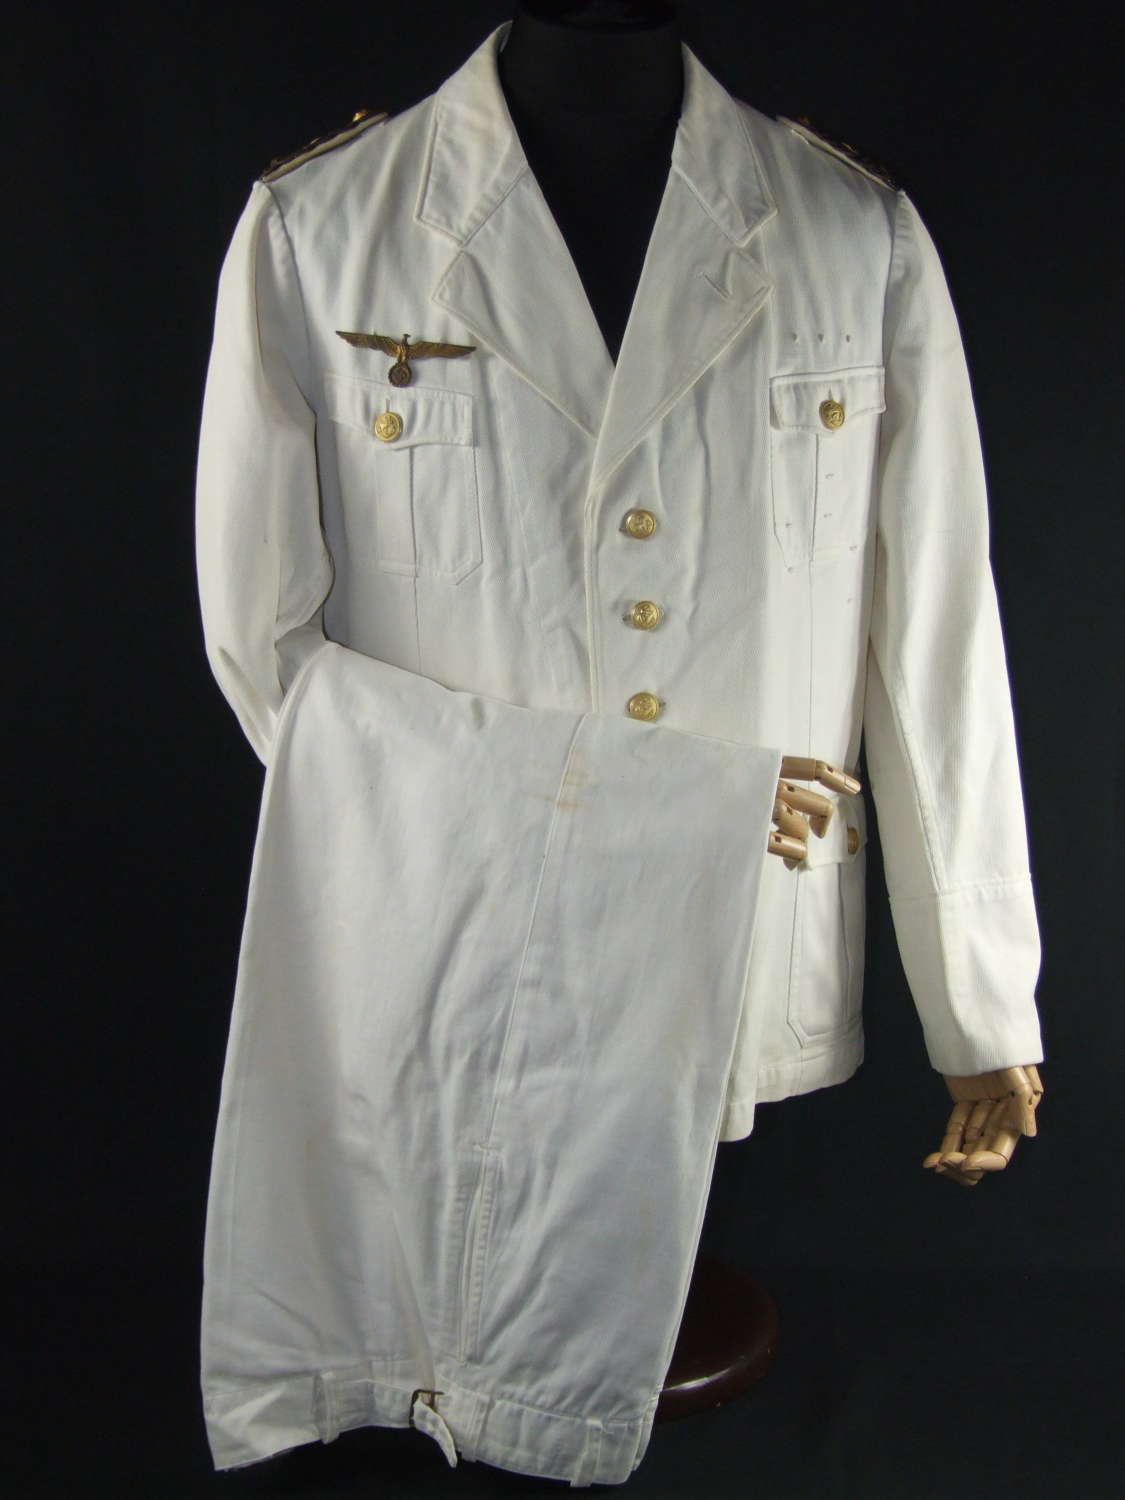 Kriegsmarine Officer's Summer Uniform